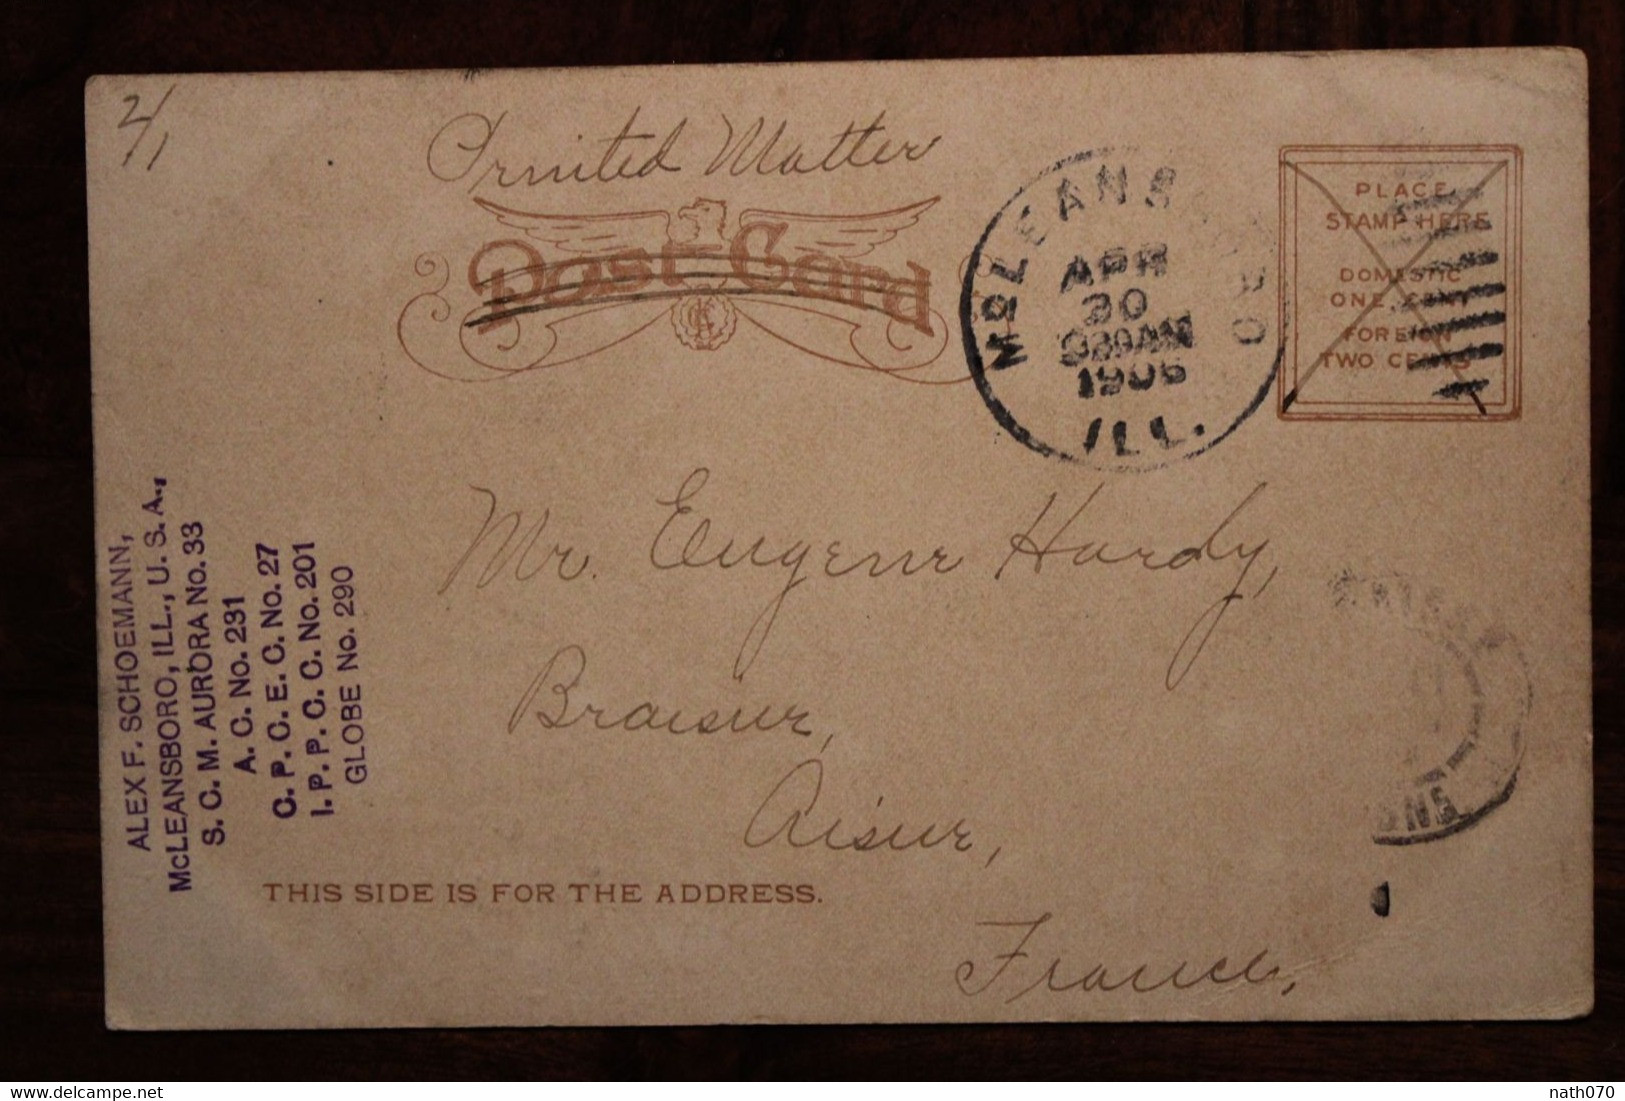 CPA Ak 1906 McLeansboro ILL Grand Boulevard Chicago USA Us Postcard Braisne France Aisne - Brieven En Documenten